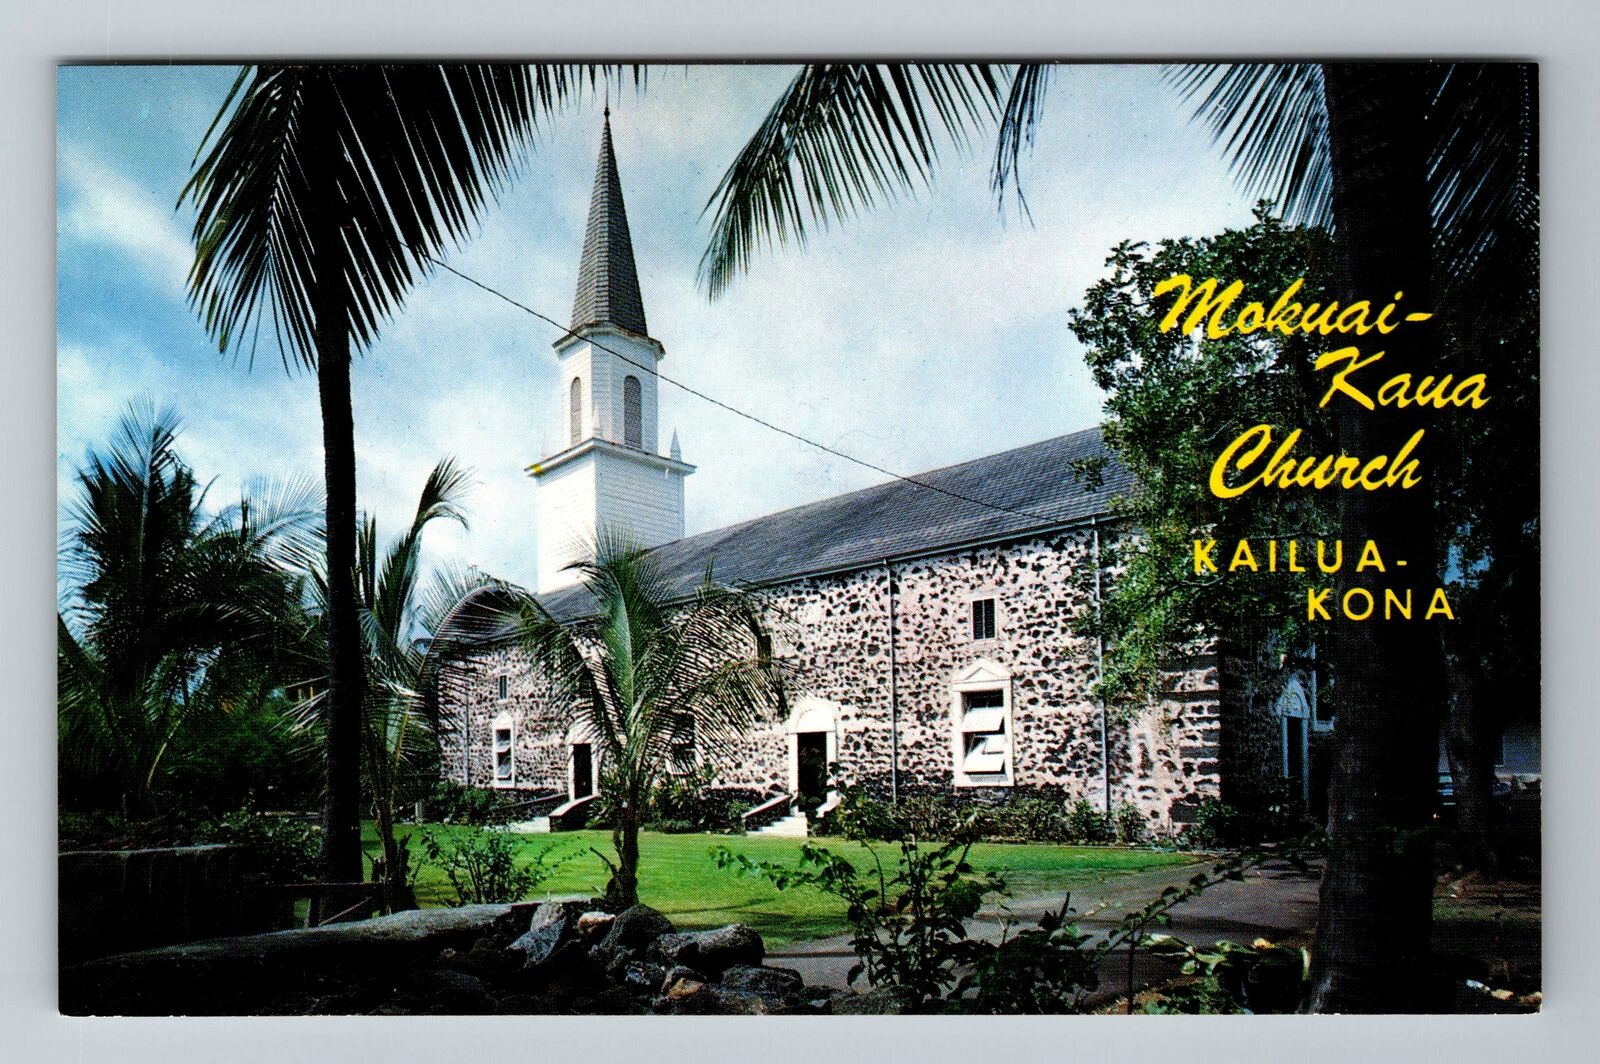 Kailua Kona HI-Hawaii Historic 1837 Mokuai Kaua Church Antique Vintage Postcard